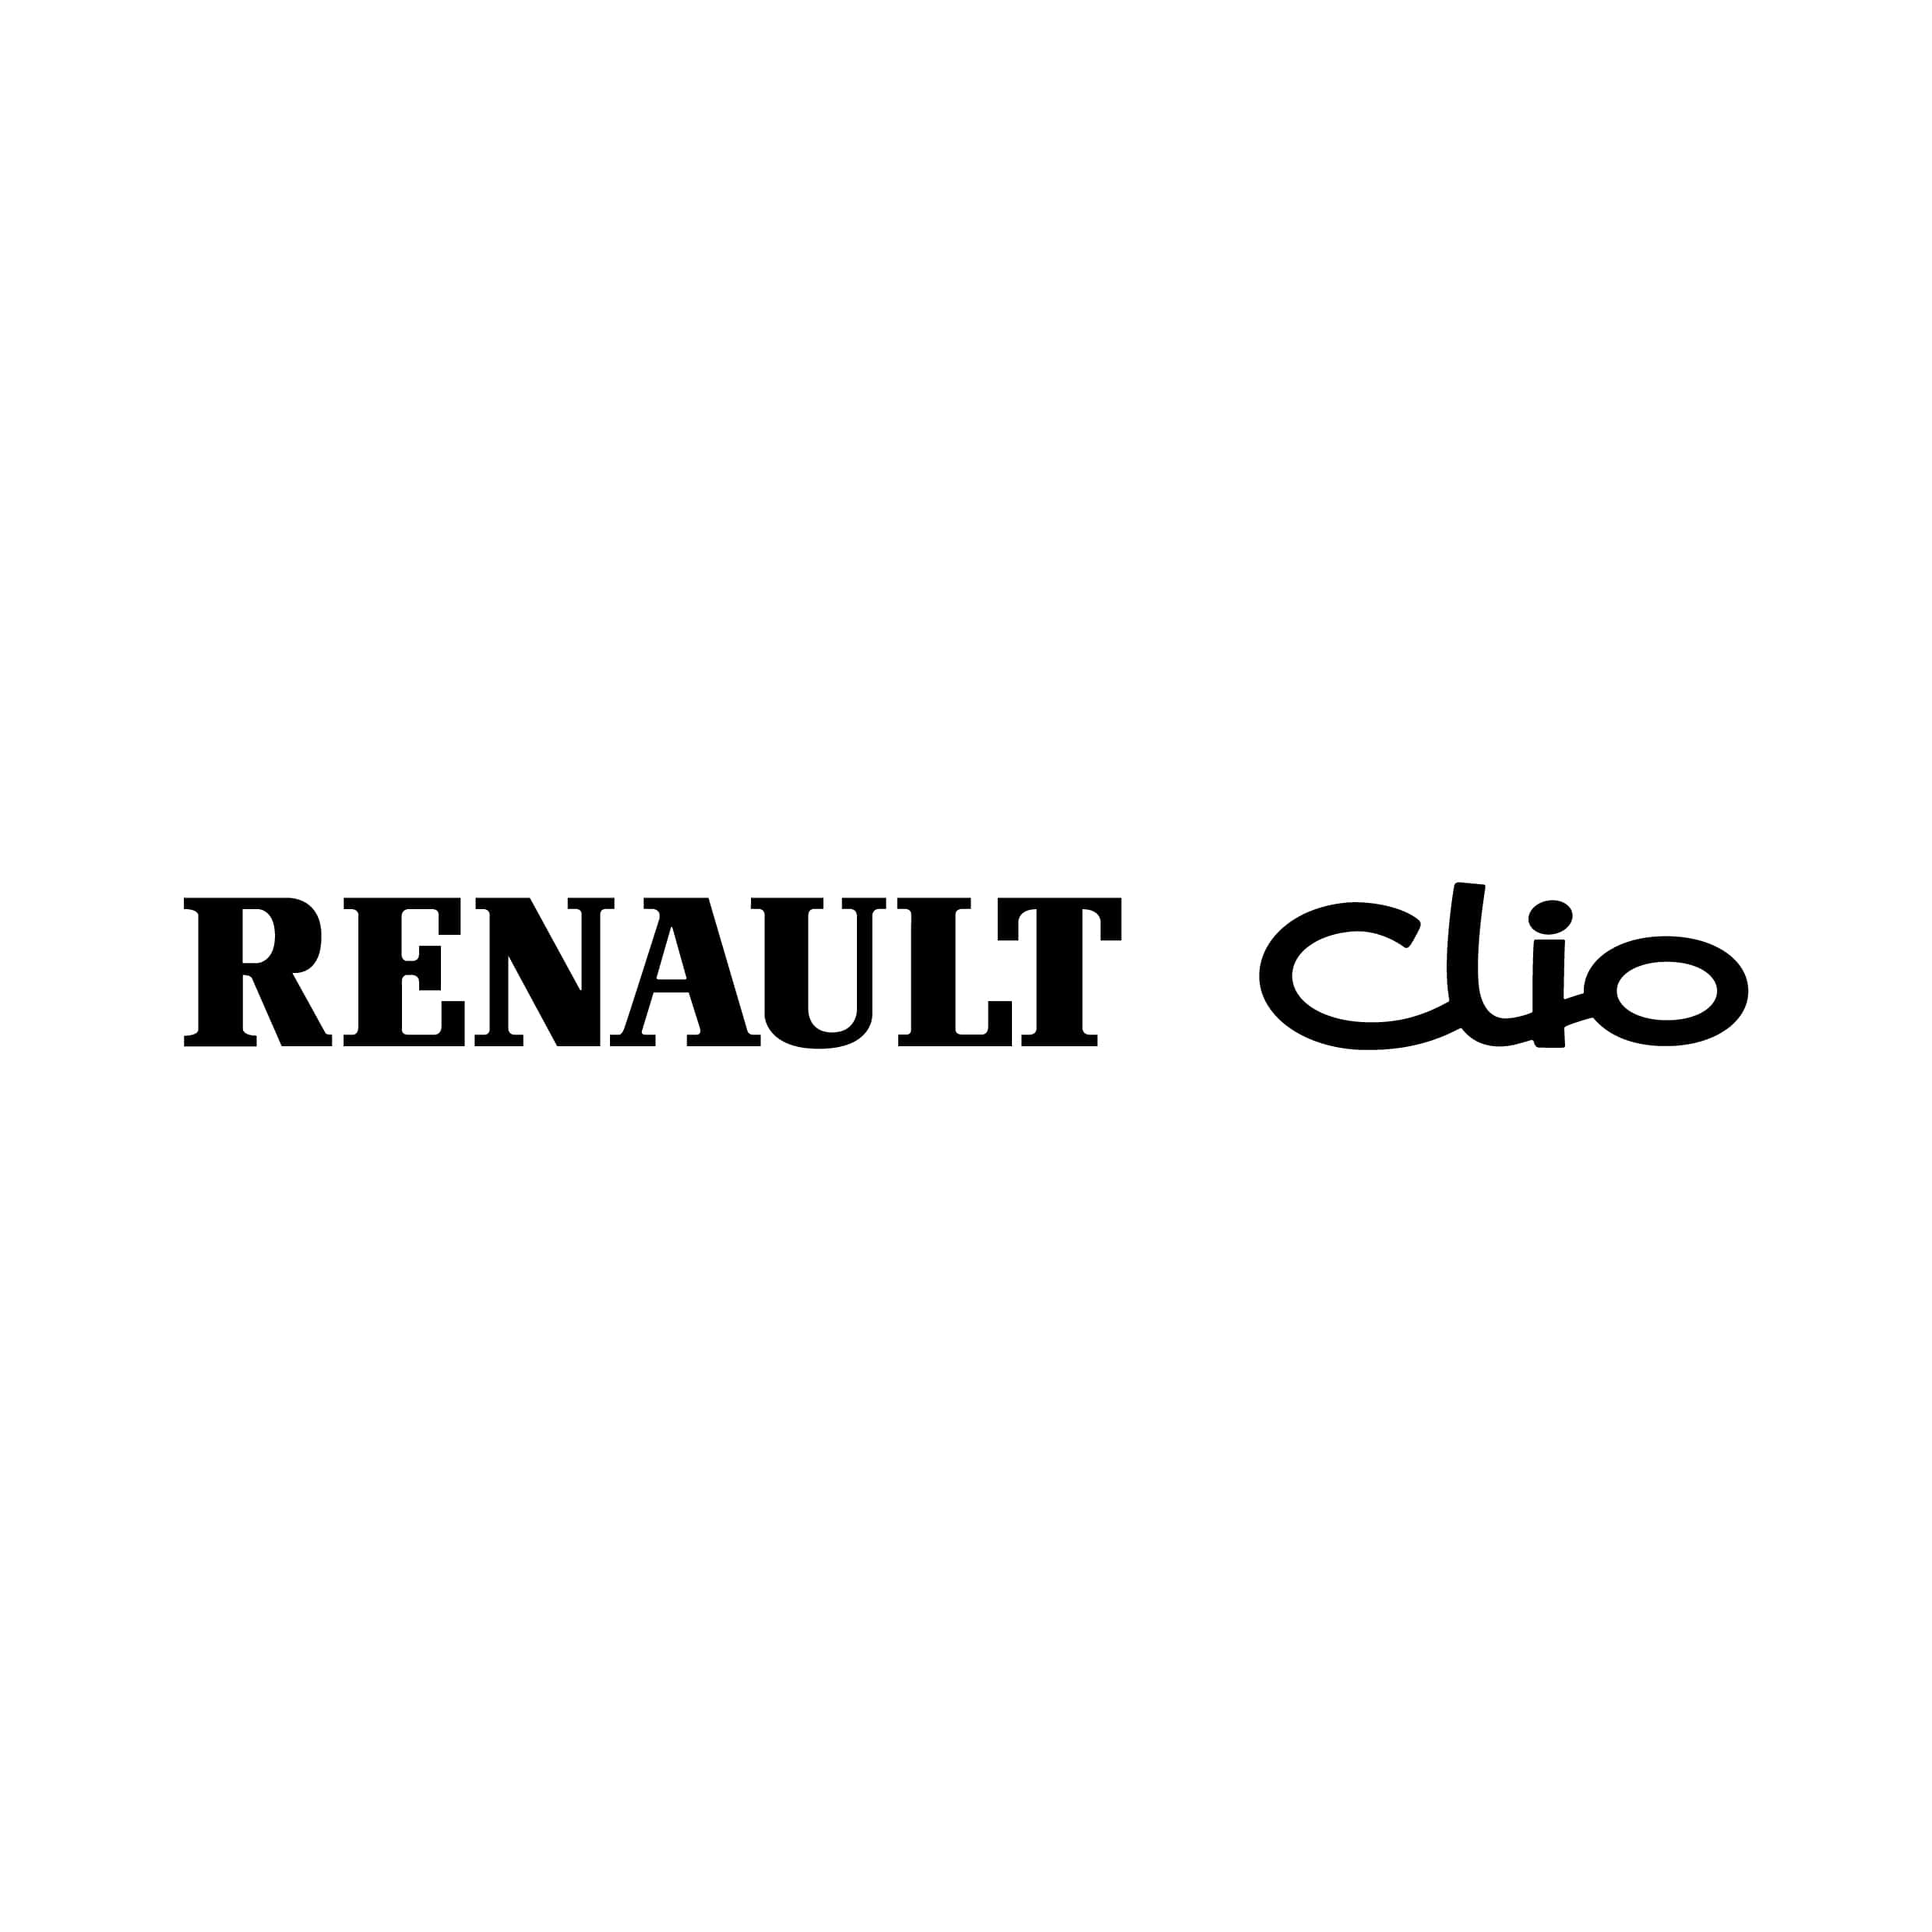 stickers-renault-clio-ref138-autocollant-voiture-sticker-auto-autocollants-decals-sponsors-racing-tuning-sport-logo-min